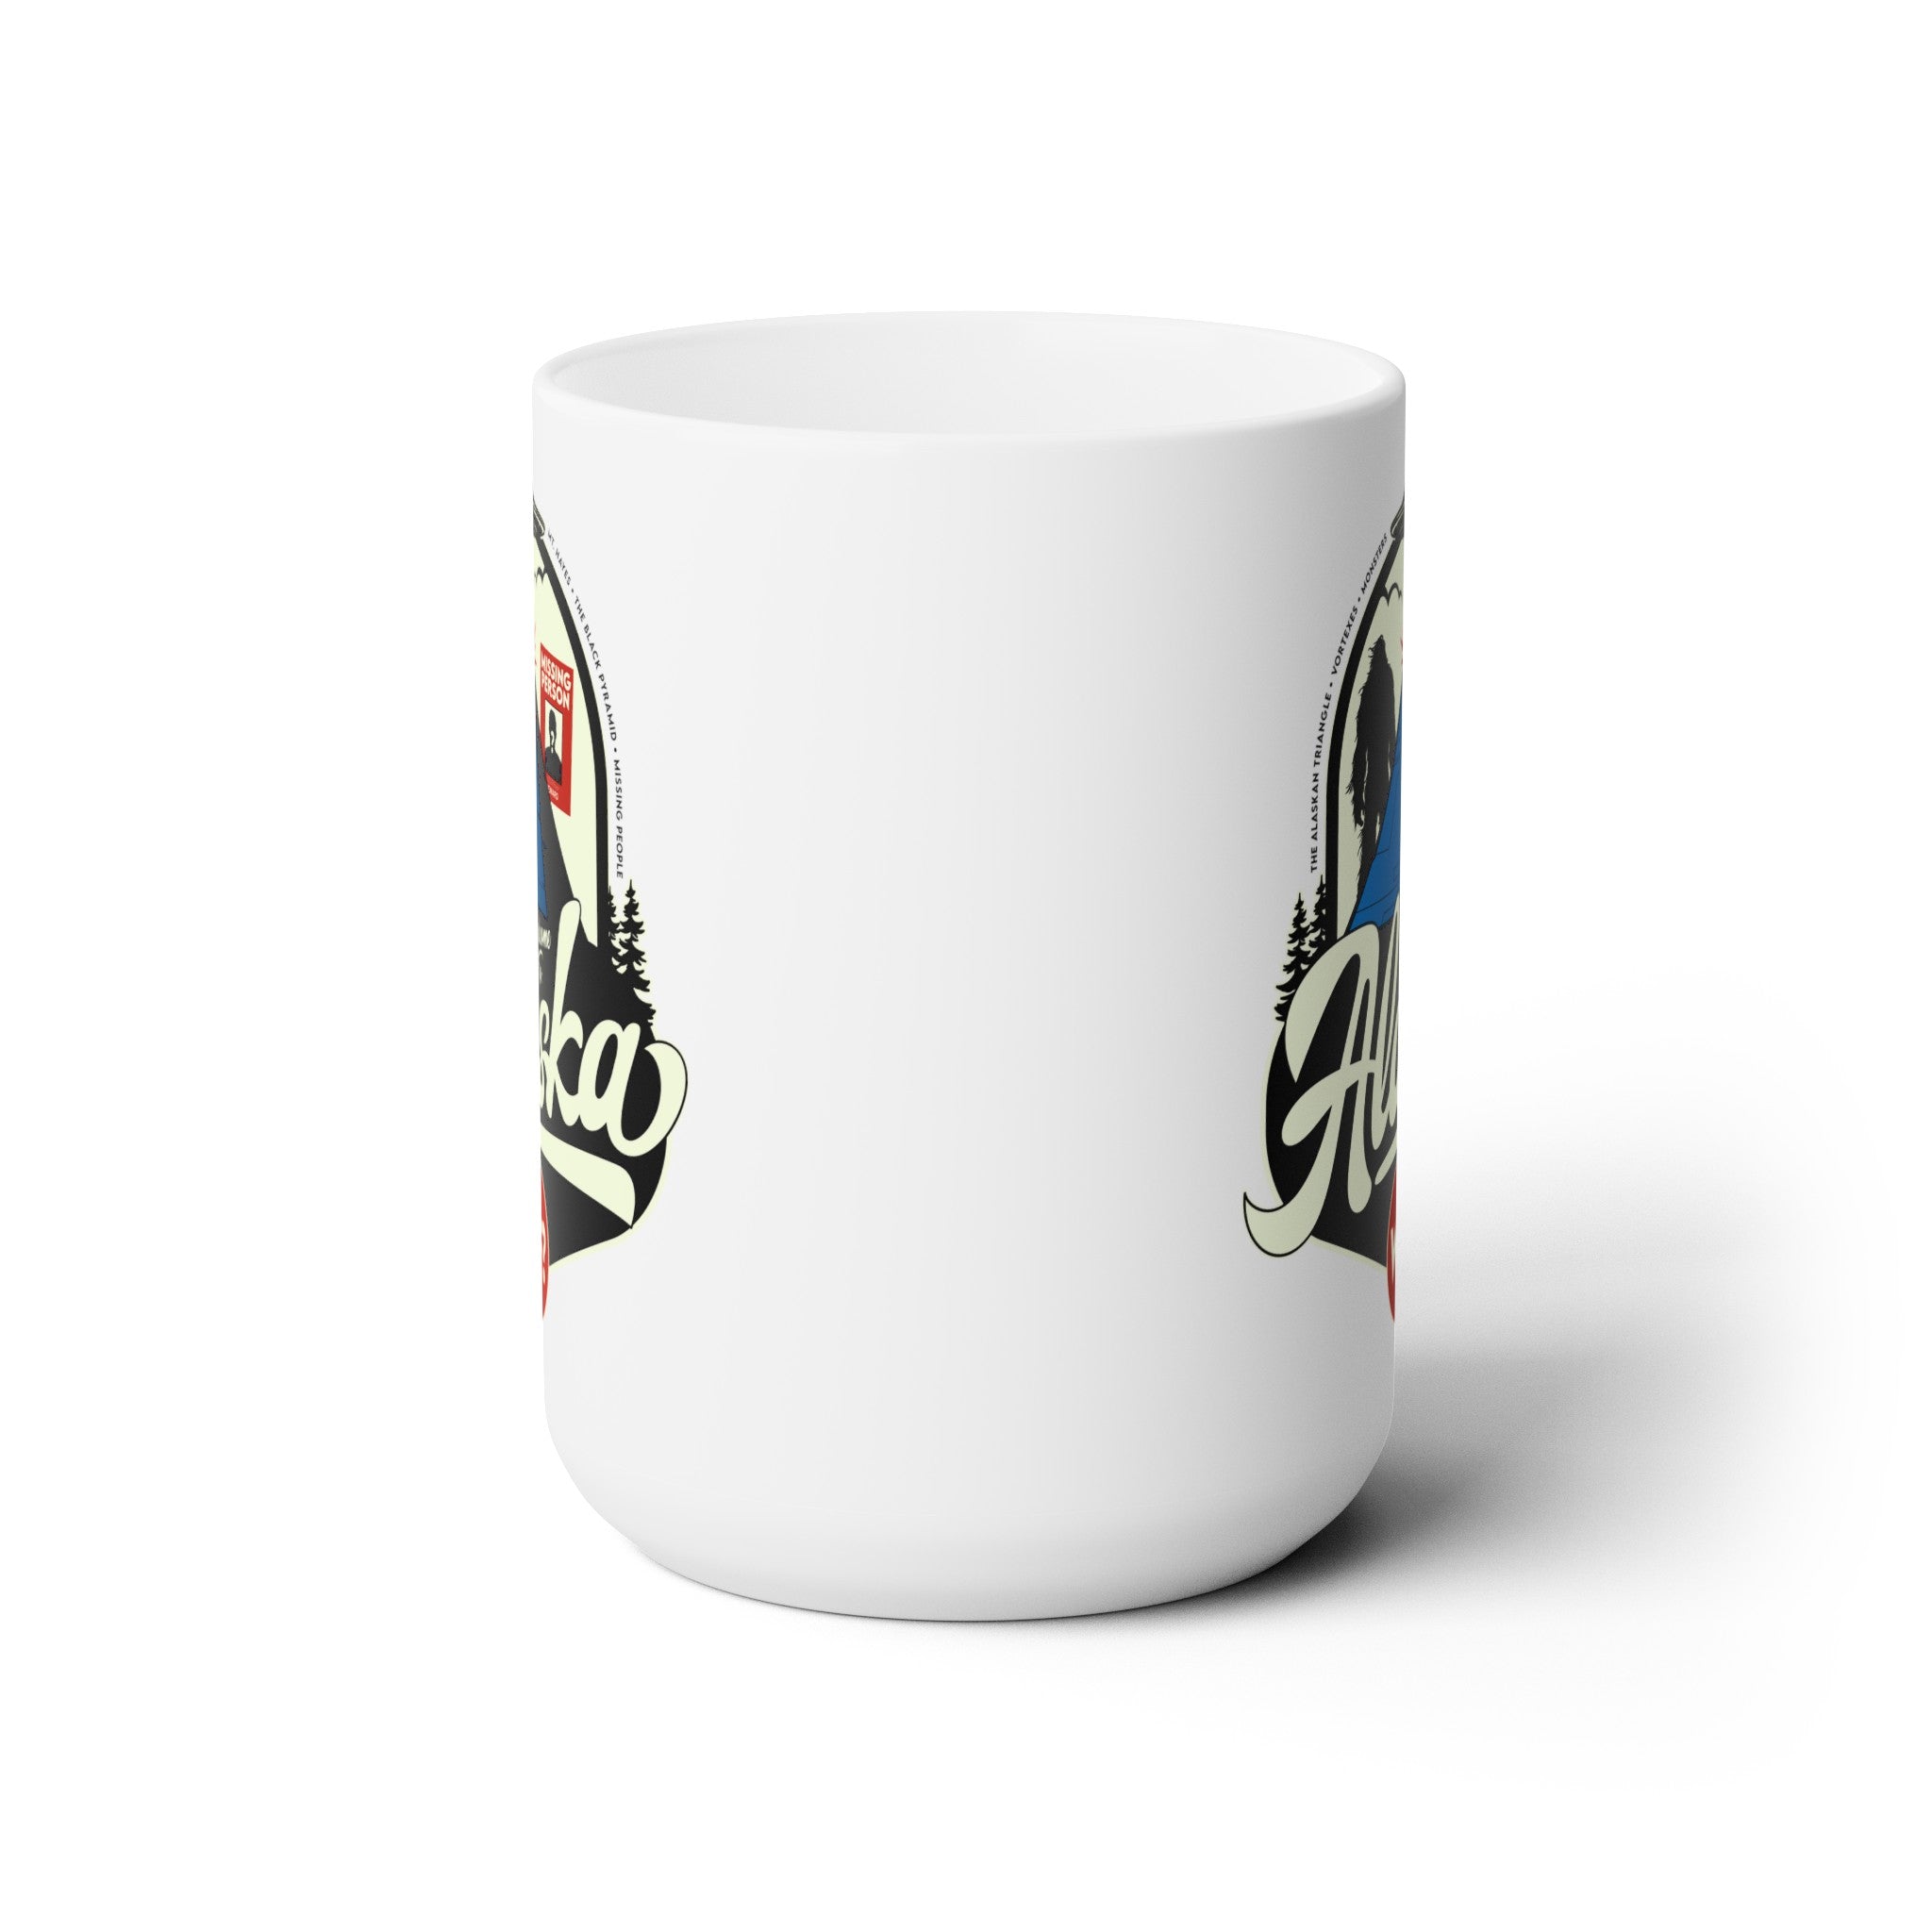 5/4 Alaska Pyramid Ceramic Mug 15oz